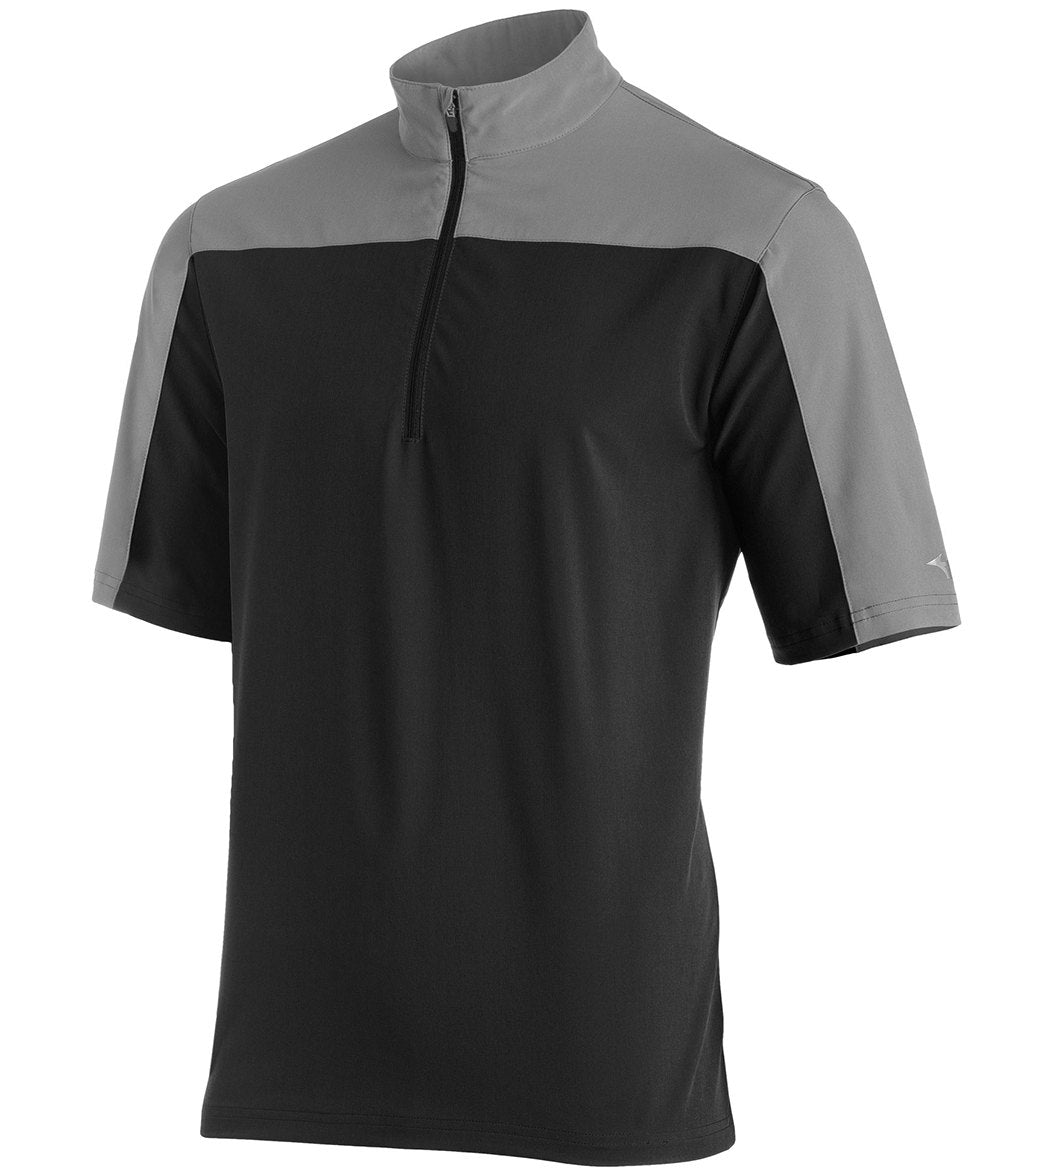 Mizuno Men's Comp Short Sleeve Batting Jacket - Black-Grey Large Black/Grey - Swimoutlet.com